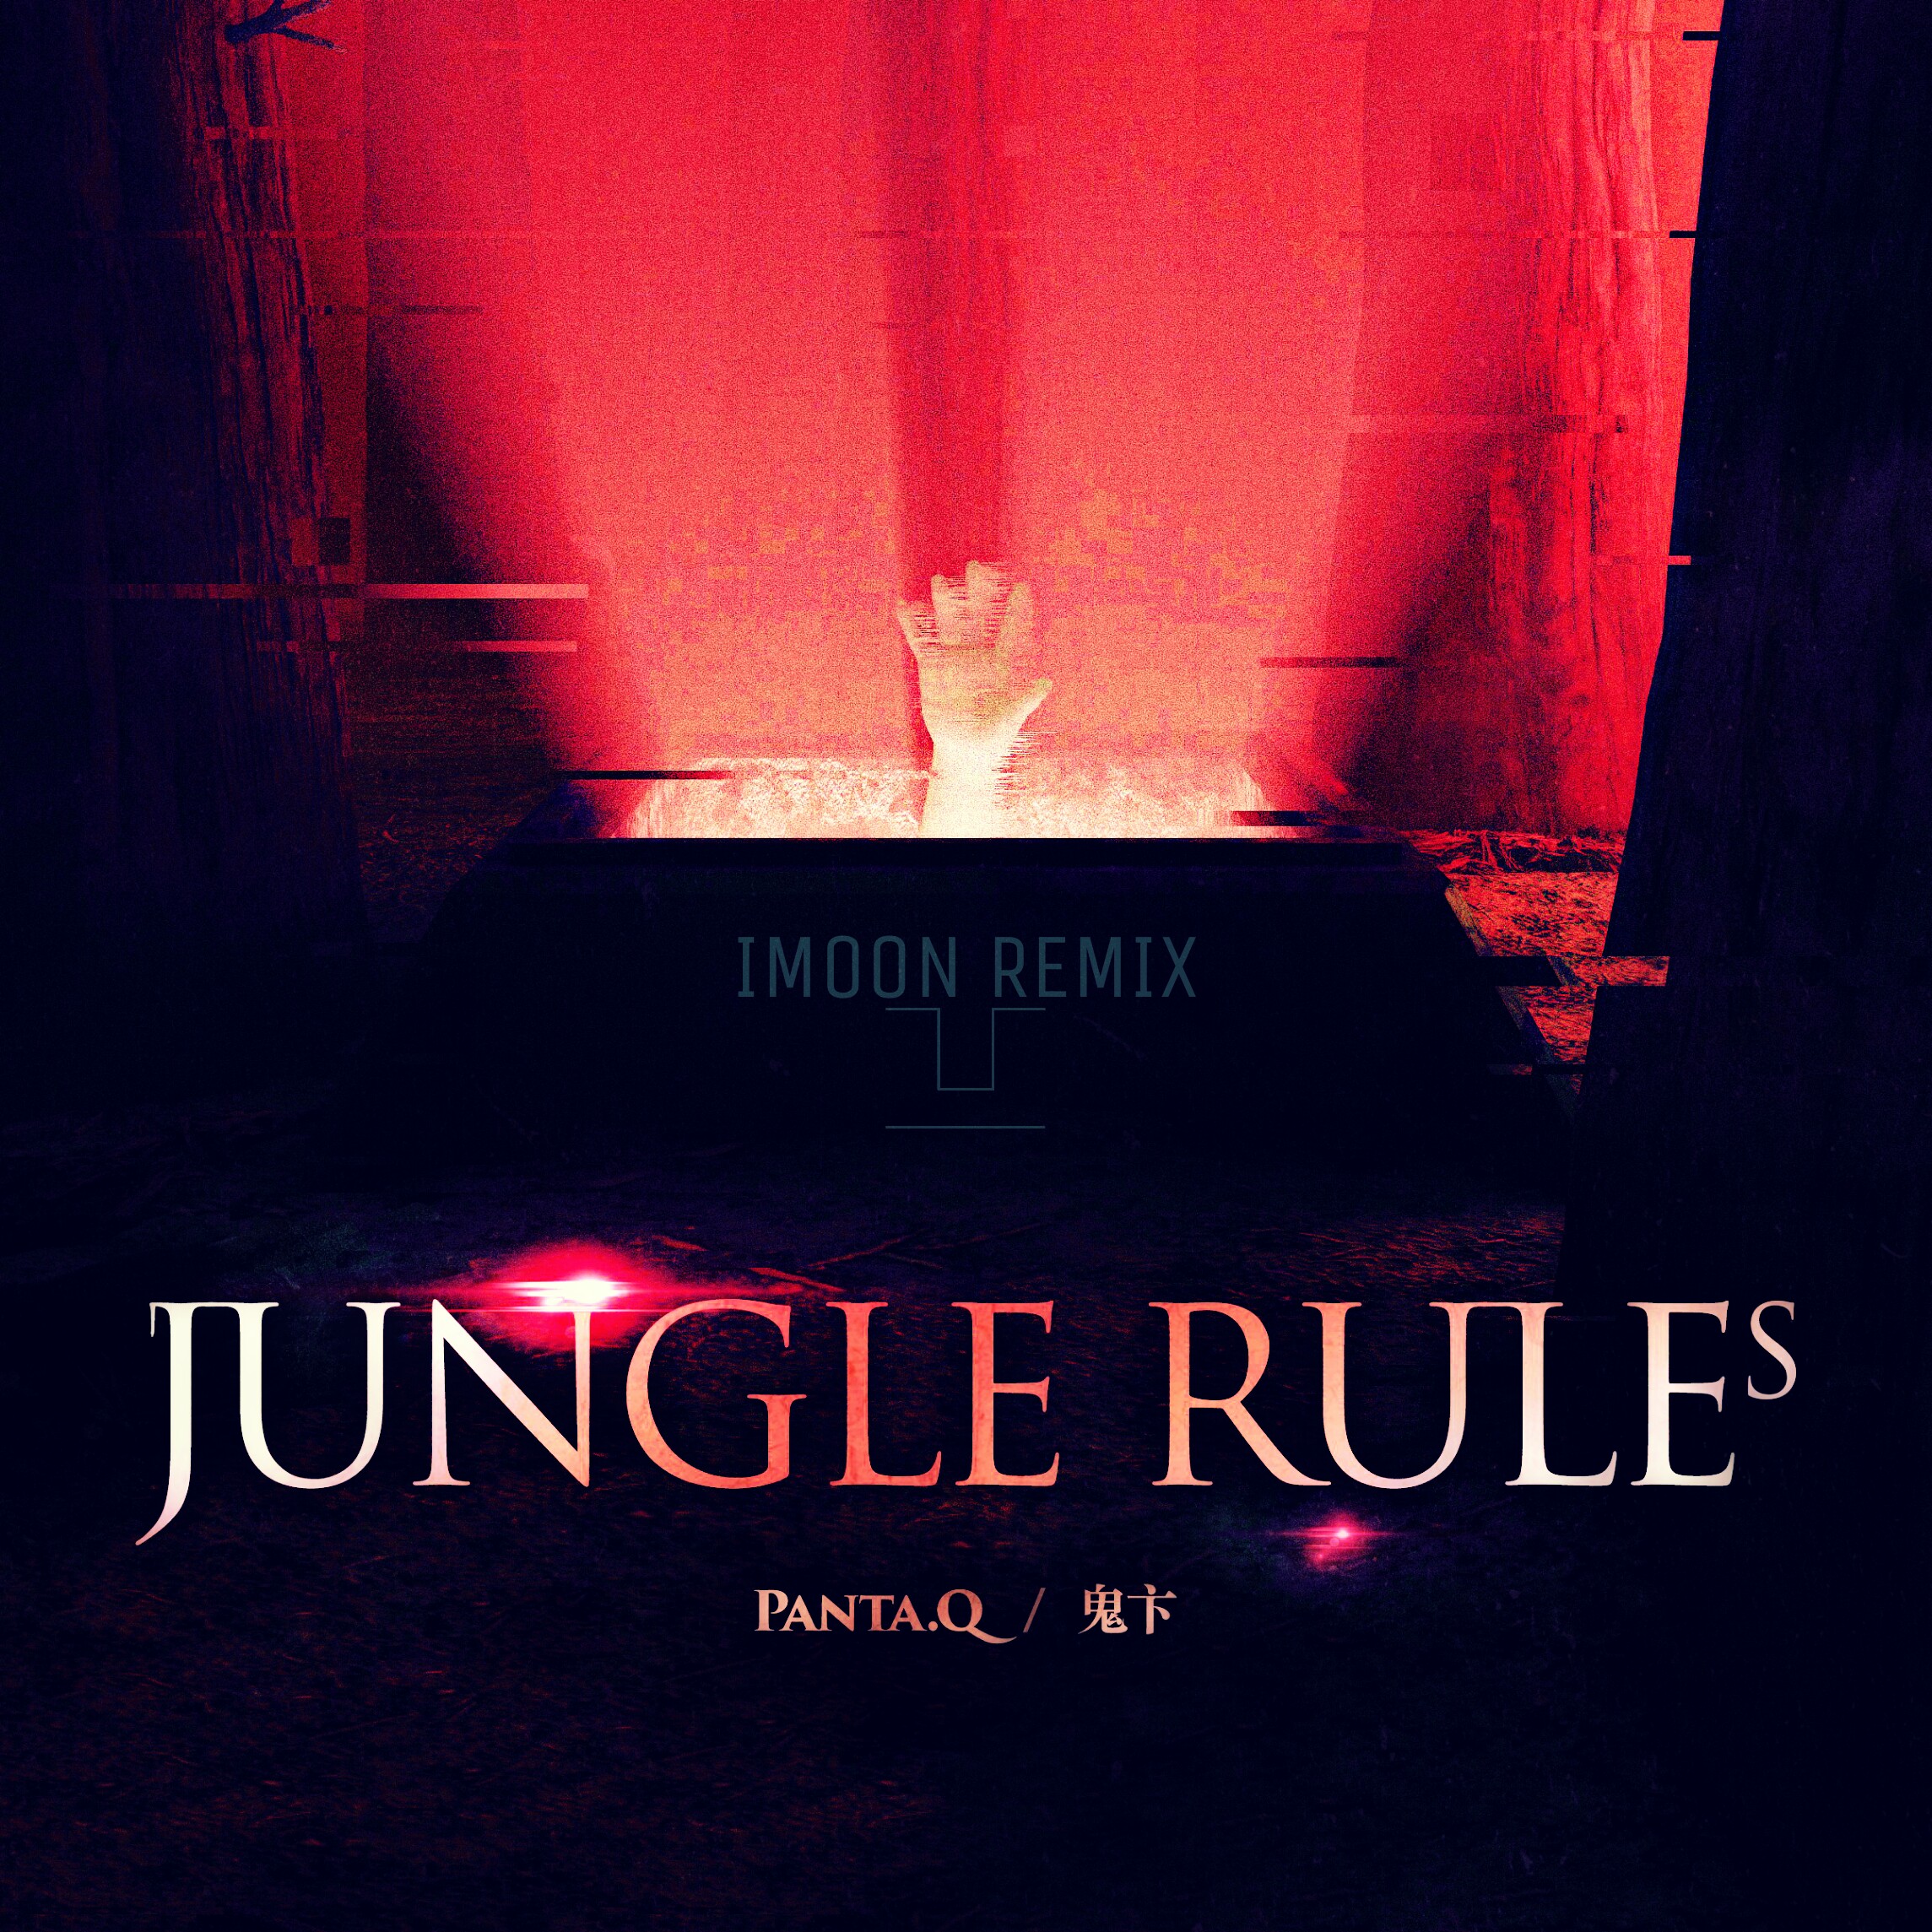 Jungle Rules (iMoon Remix)